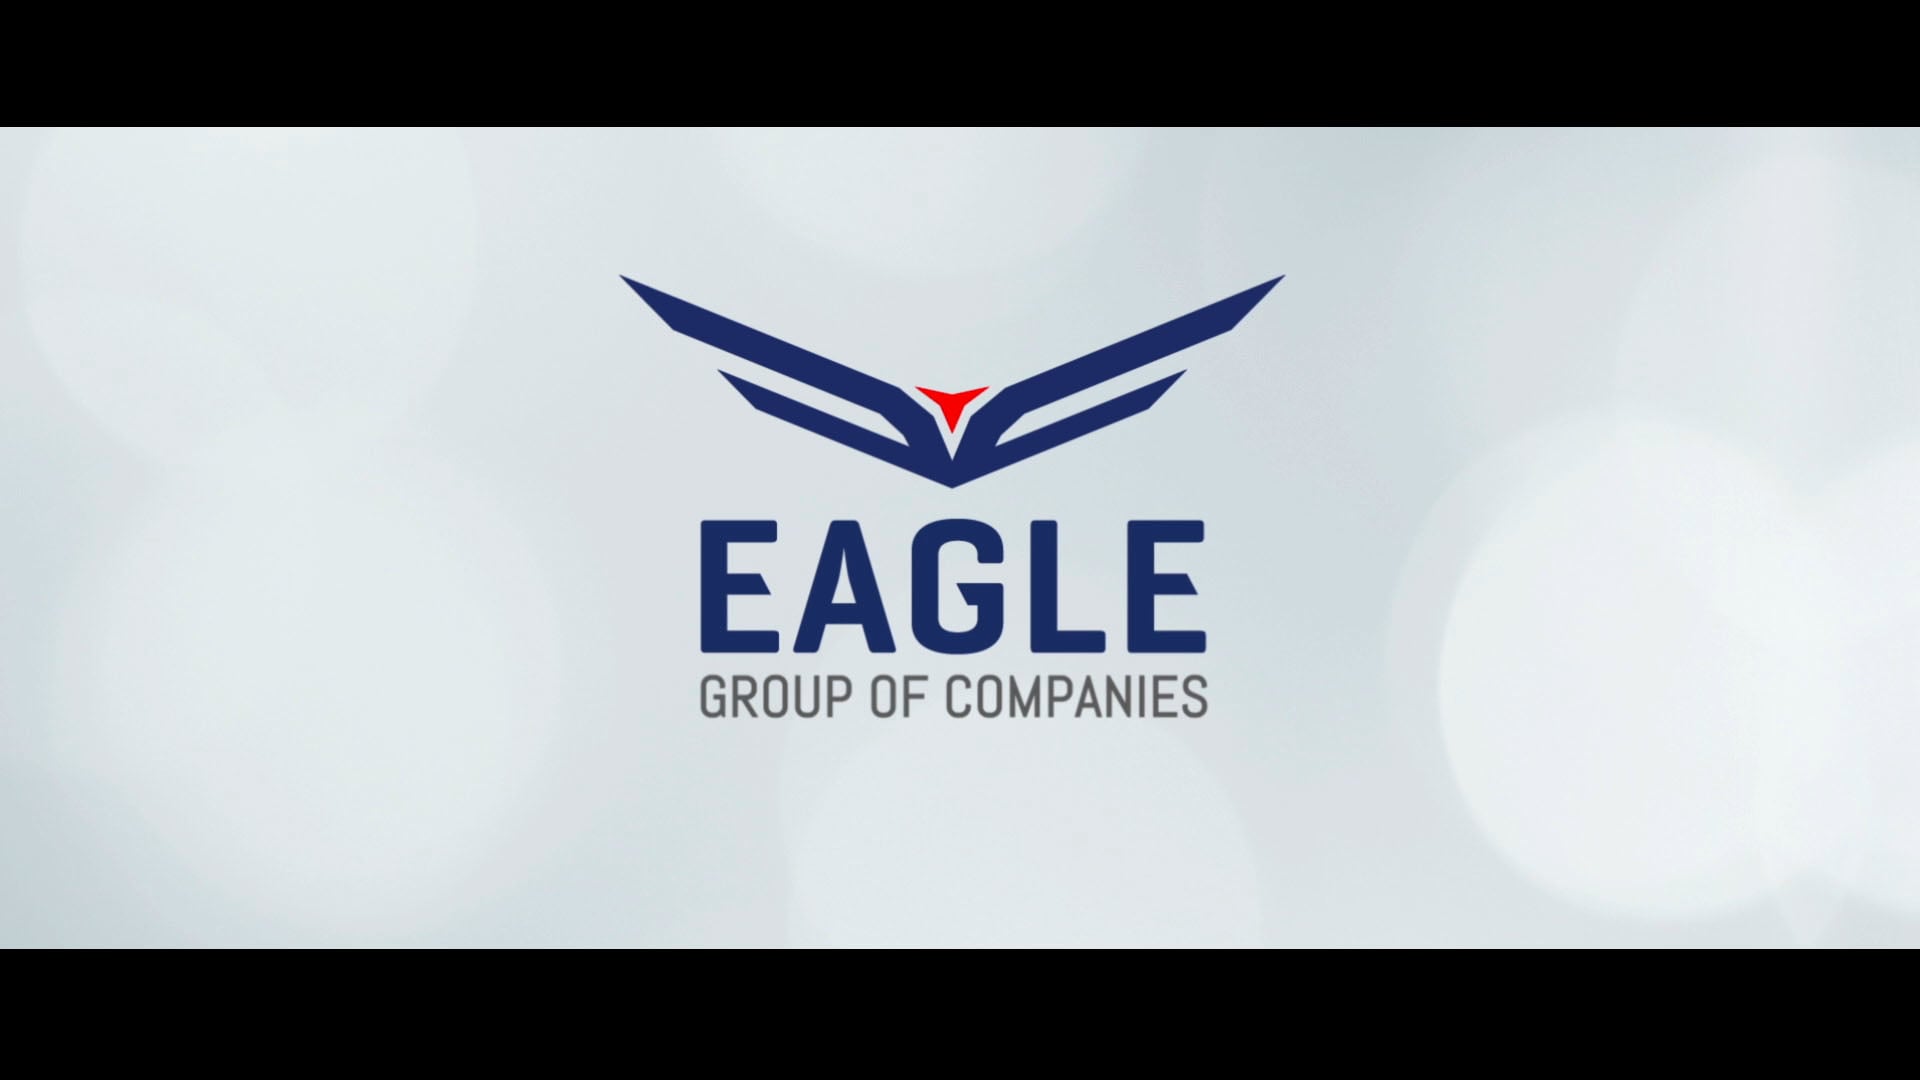 EAGLE Group of companies